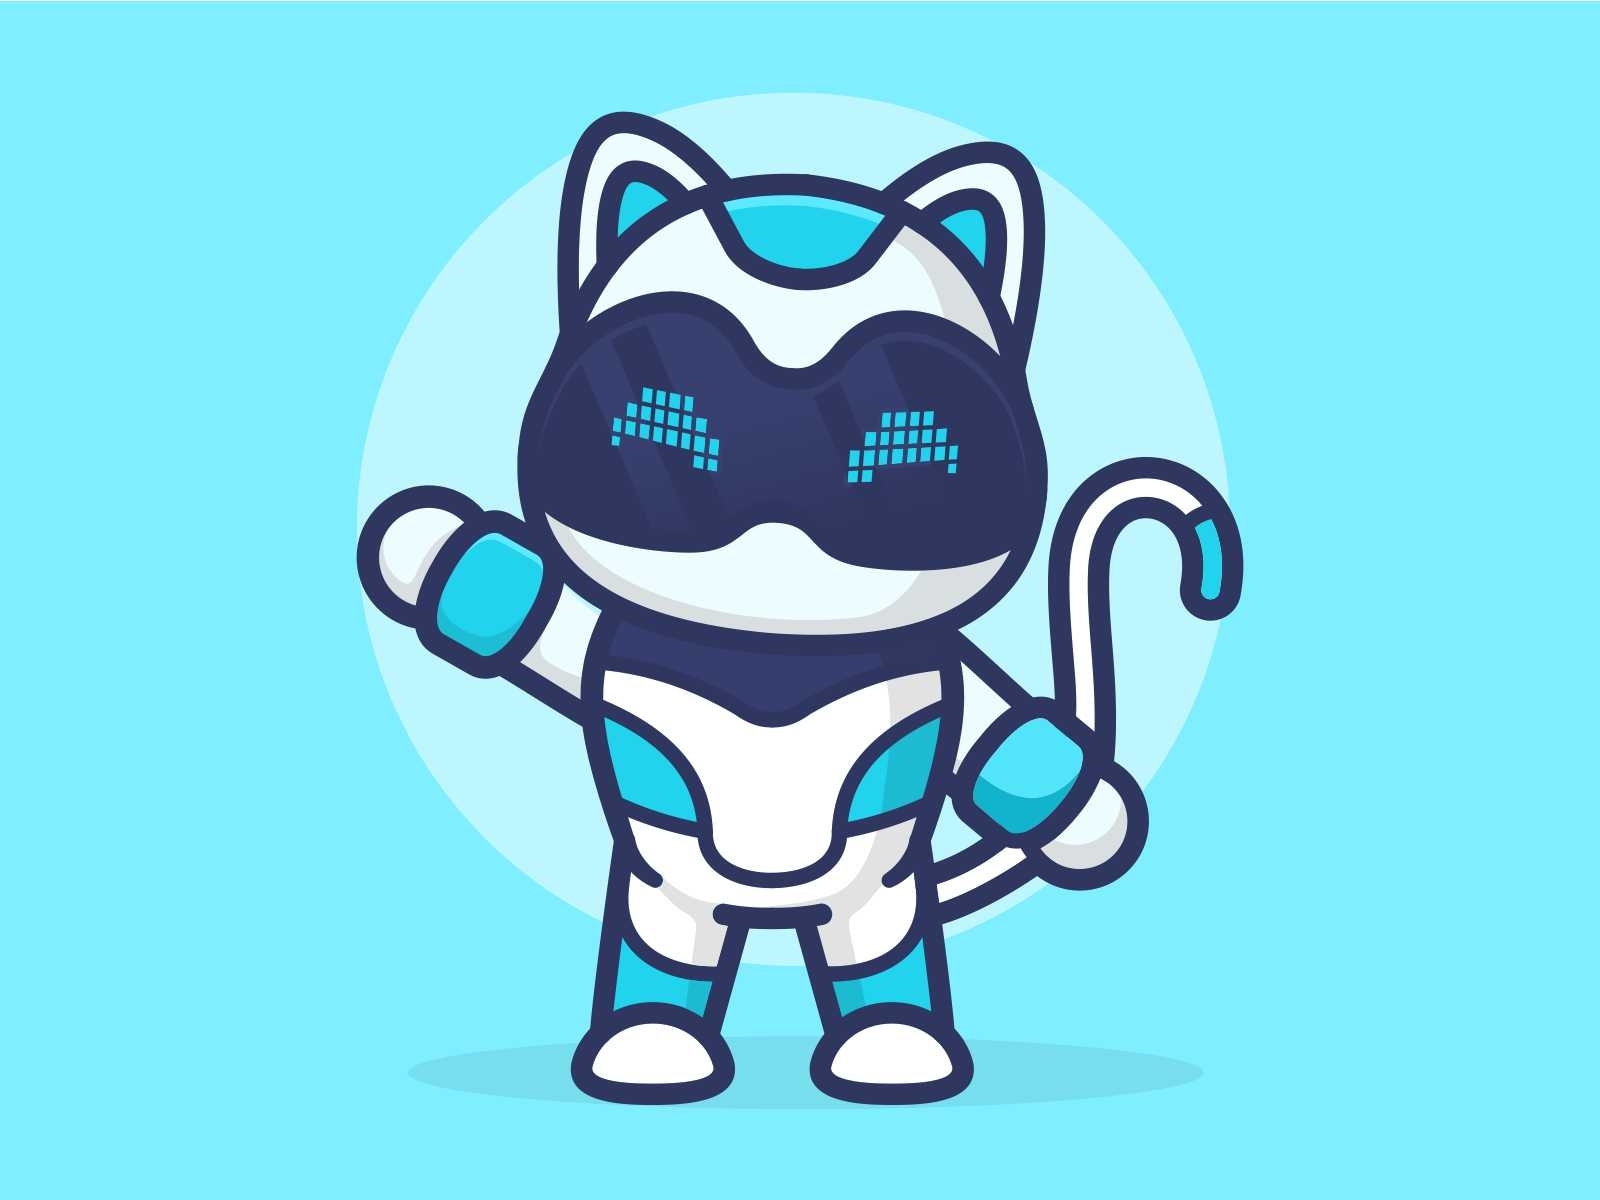 Cat Robot Cute Illustration by Kiutimood on Dribbble